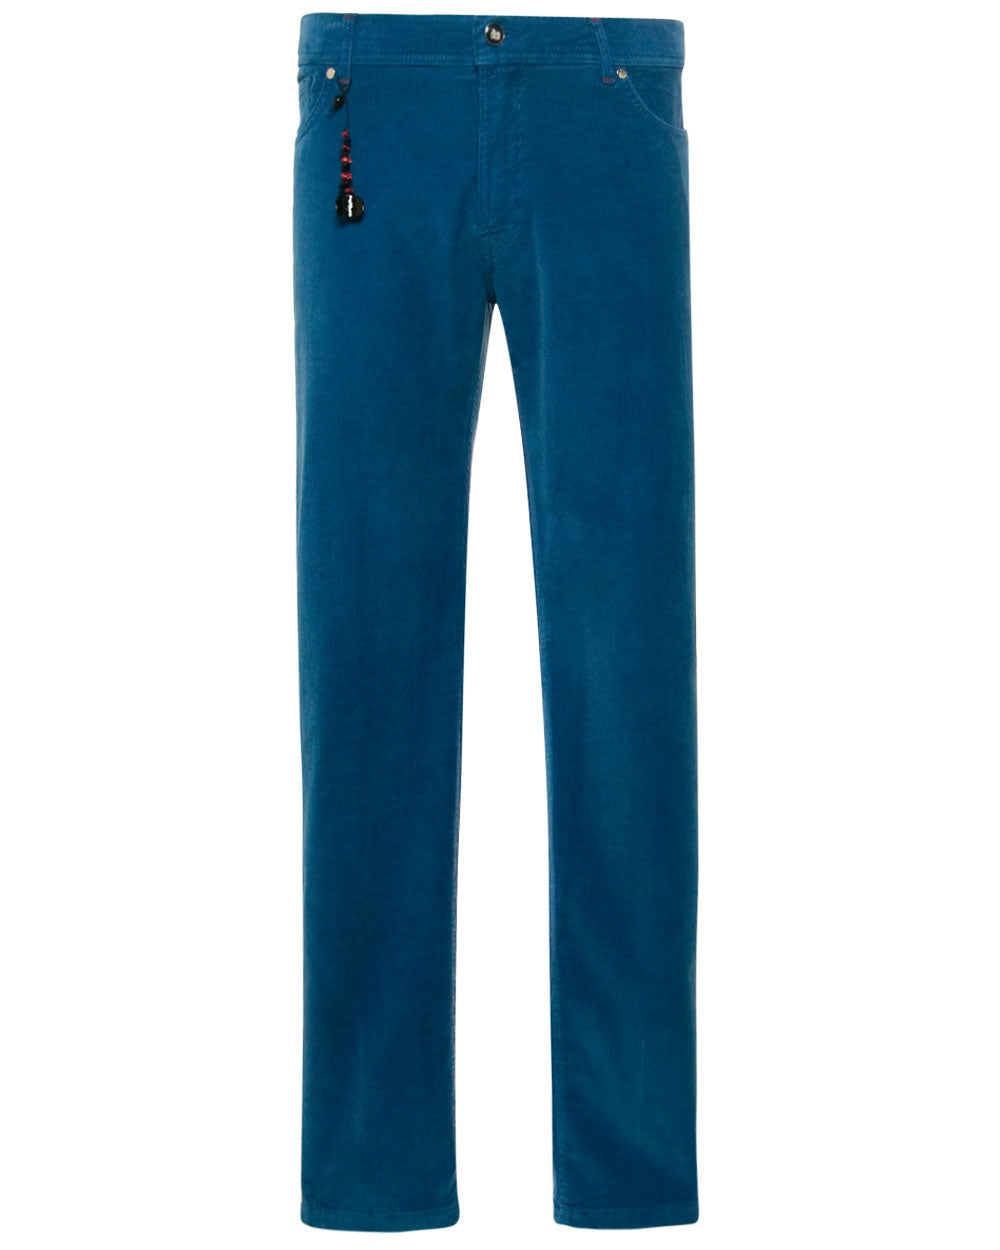 Bright Blue Corduroy Pant